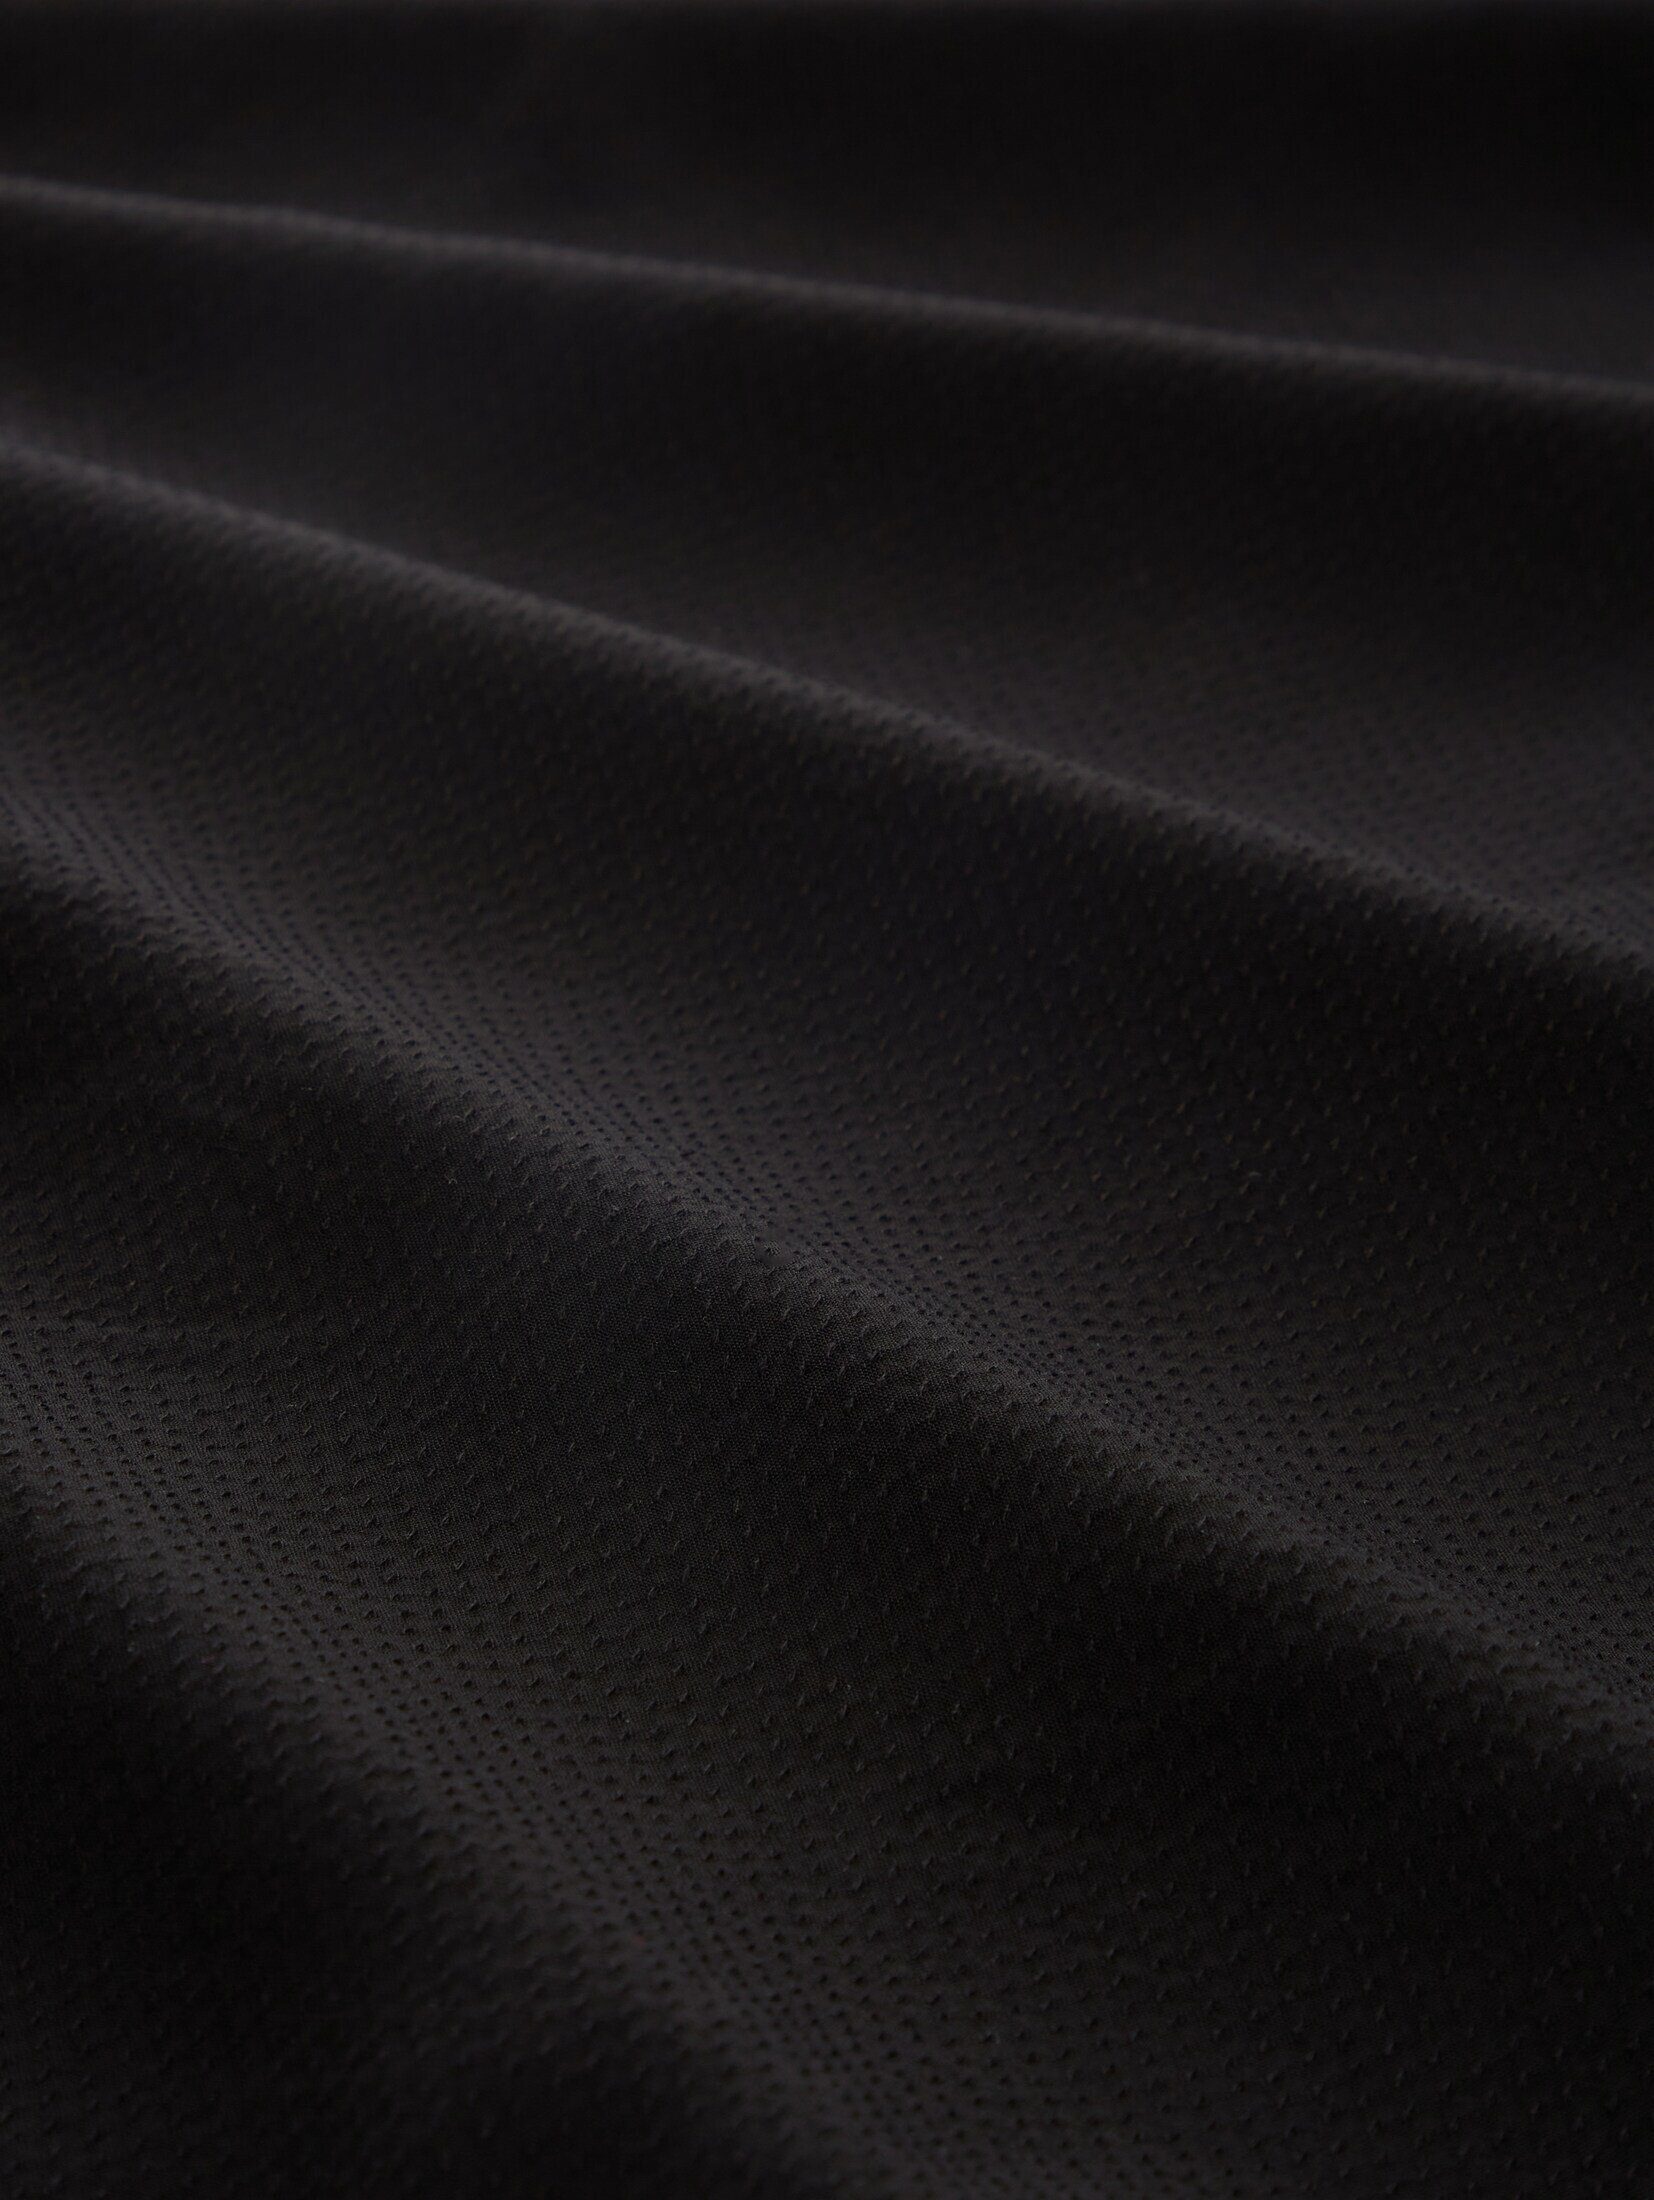 TOM TAILOR Jerseykleid Kleid mit Struktur deep black